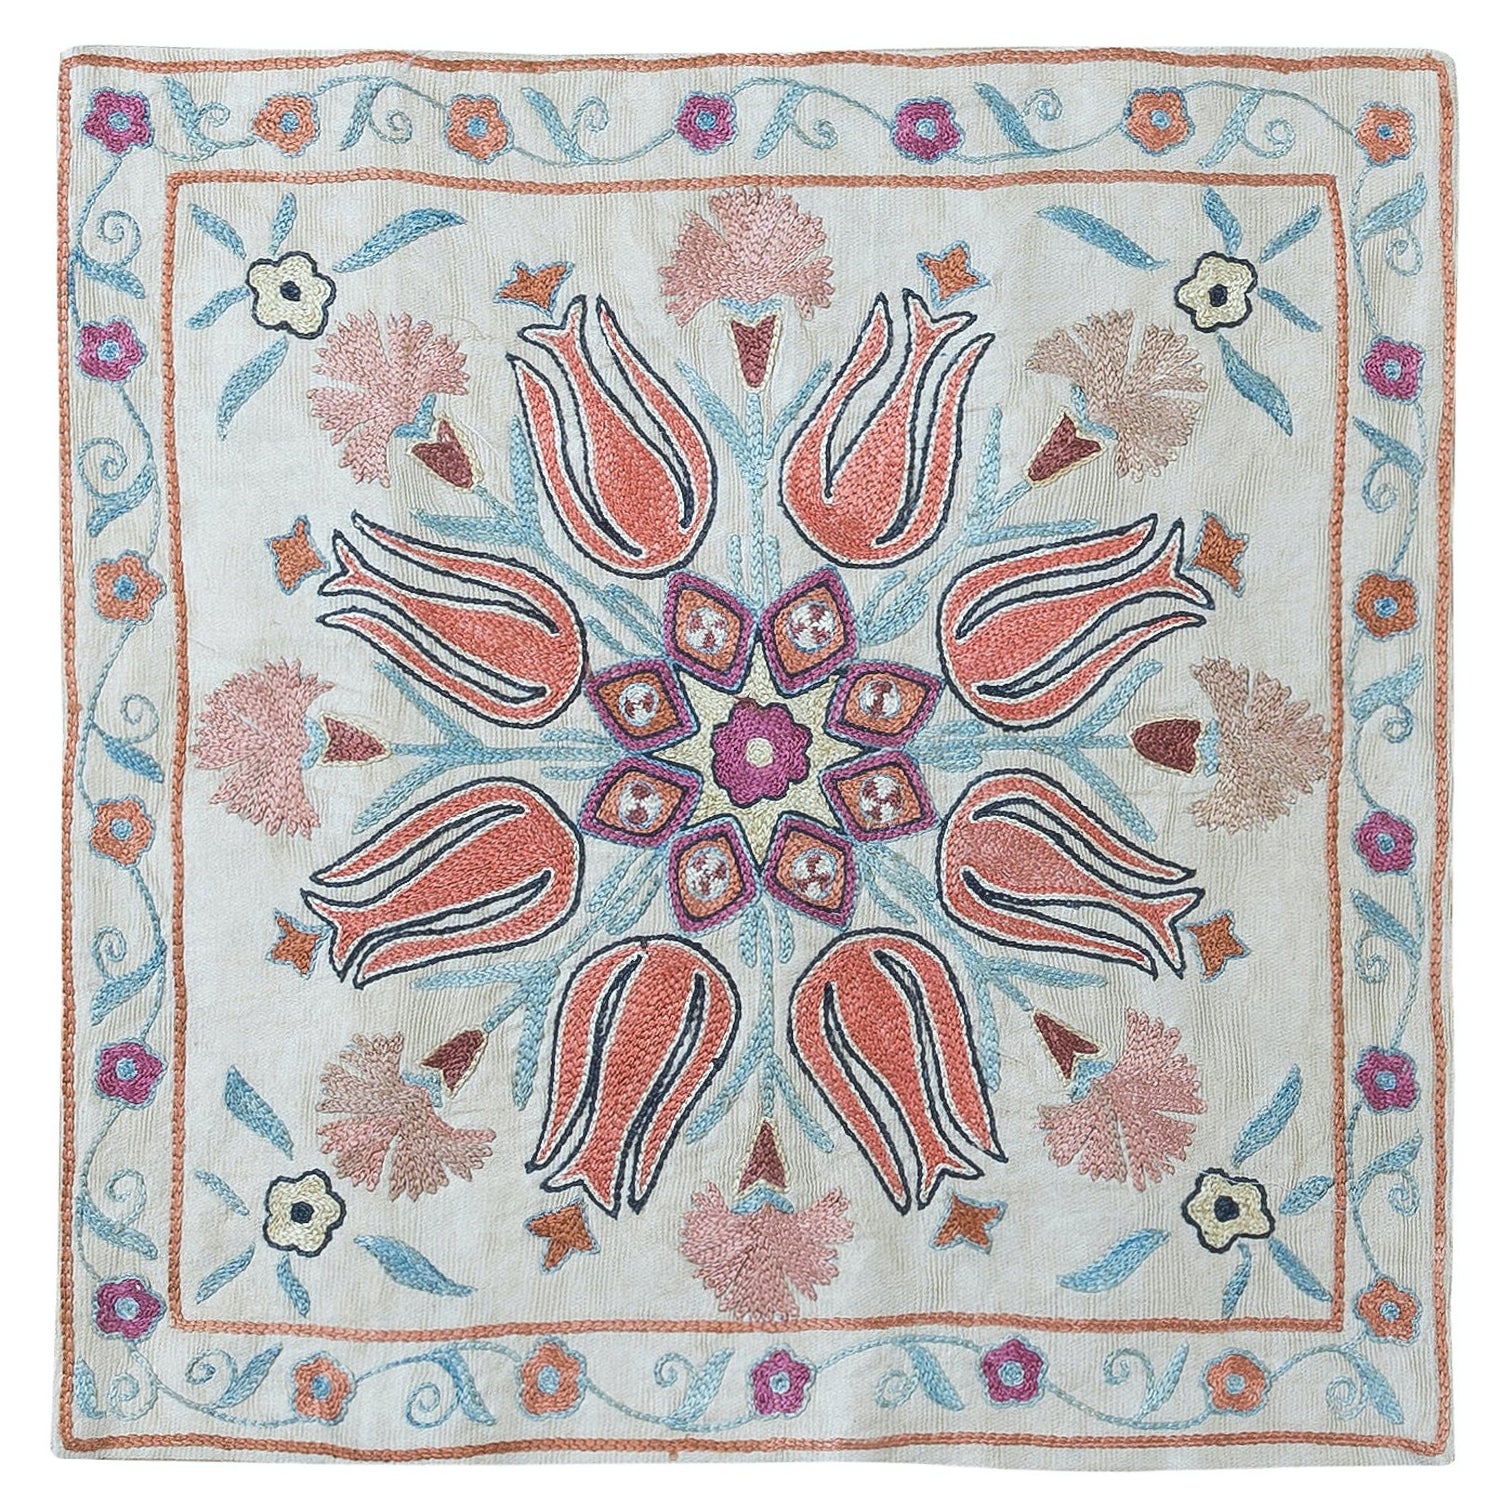 Uzbek Suzani Throw Pillow, 100% Silk Hand Embroidery Cushion Cover. 19"x19" For Sale